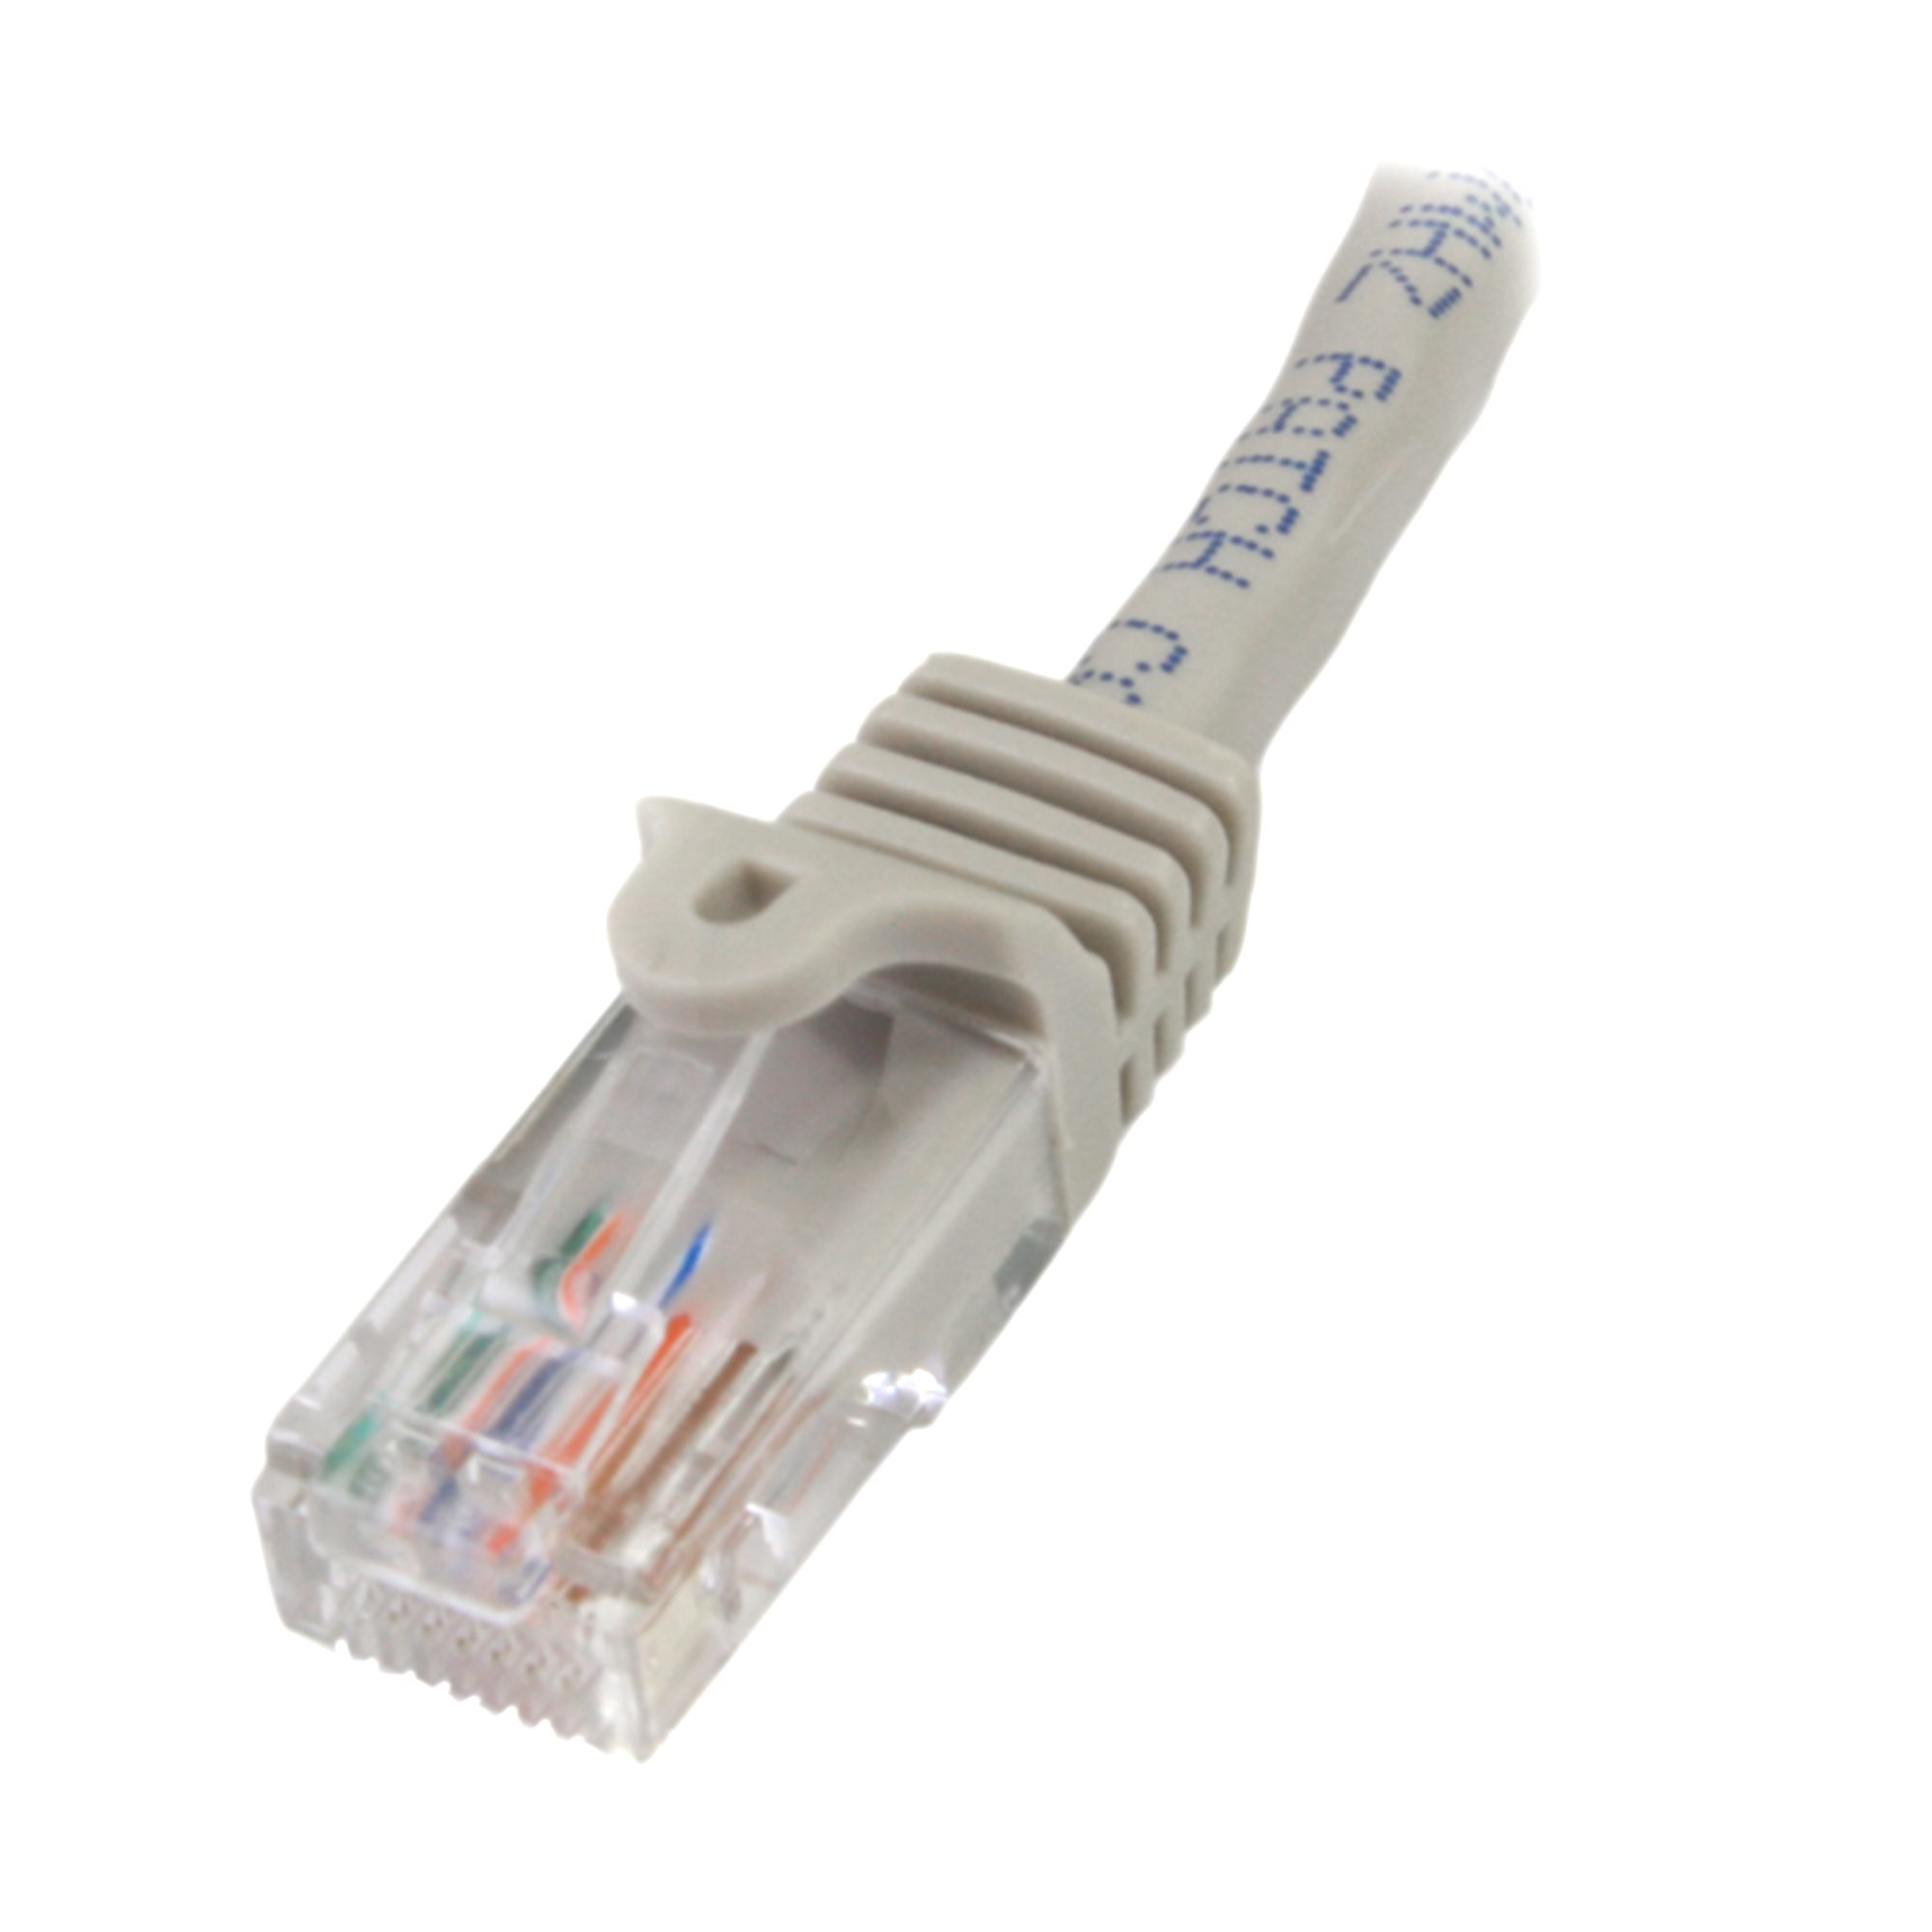 StarTech.com 0,5m Cat5e Ethernet Netzwerkkabel Snagless mit RJ45 - Cat 5e UTP Kabel - Grau - Patch-Kabel - RJ-45 (M)